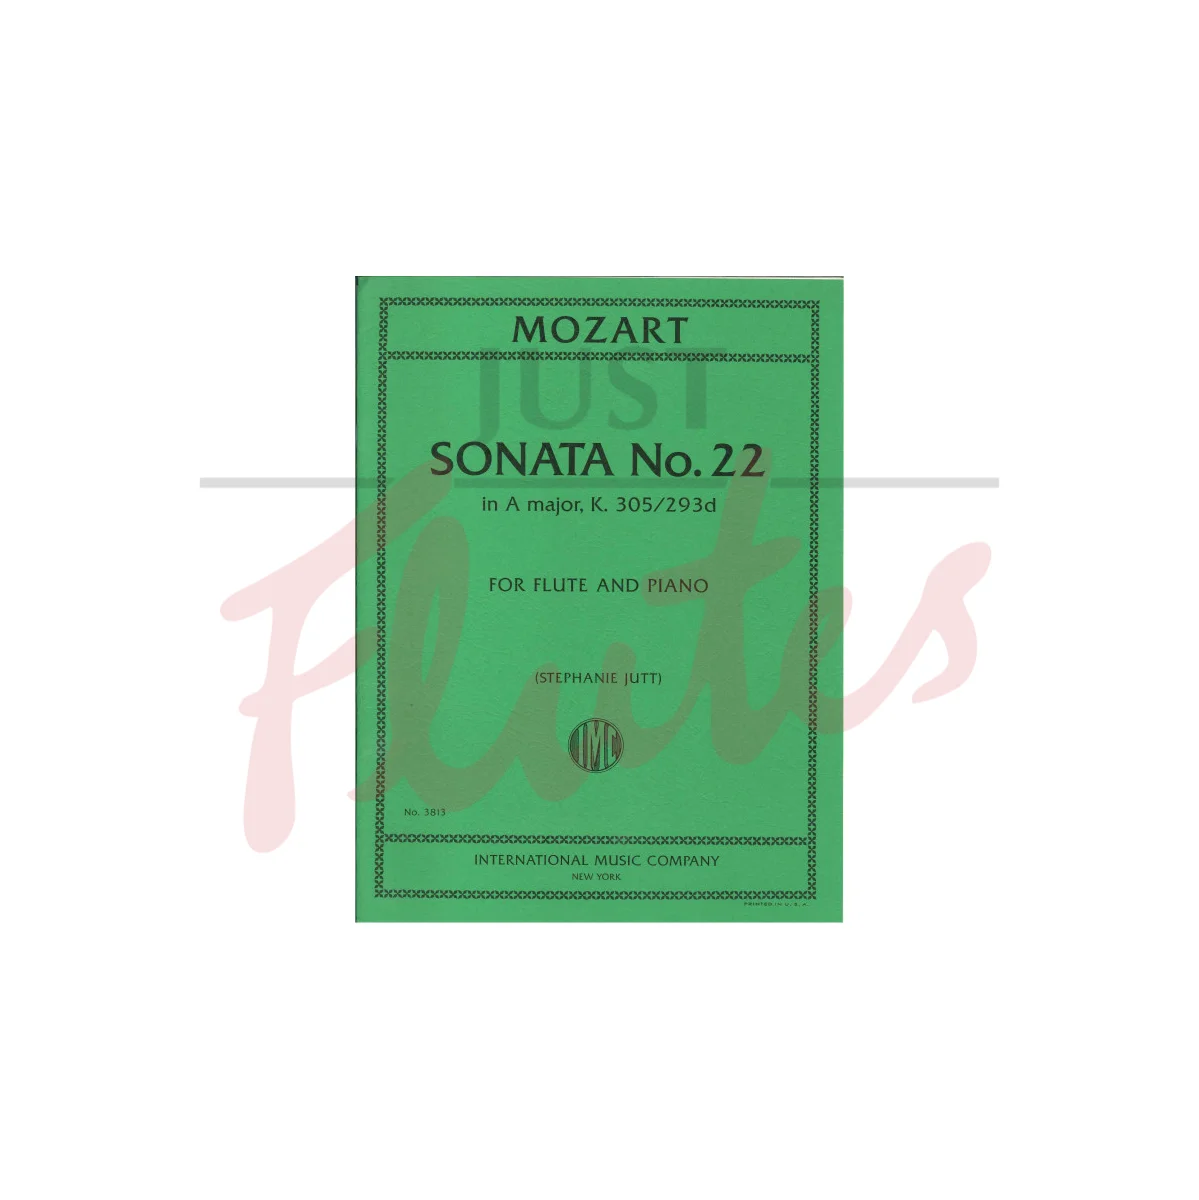 Sonata No. 22 in A major for Flute and Piano